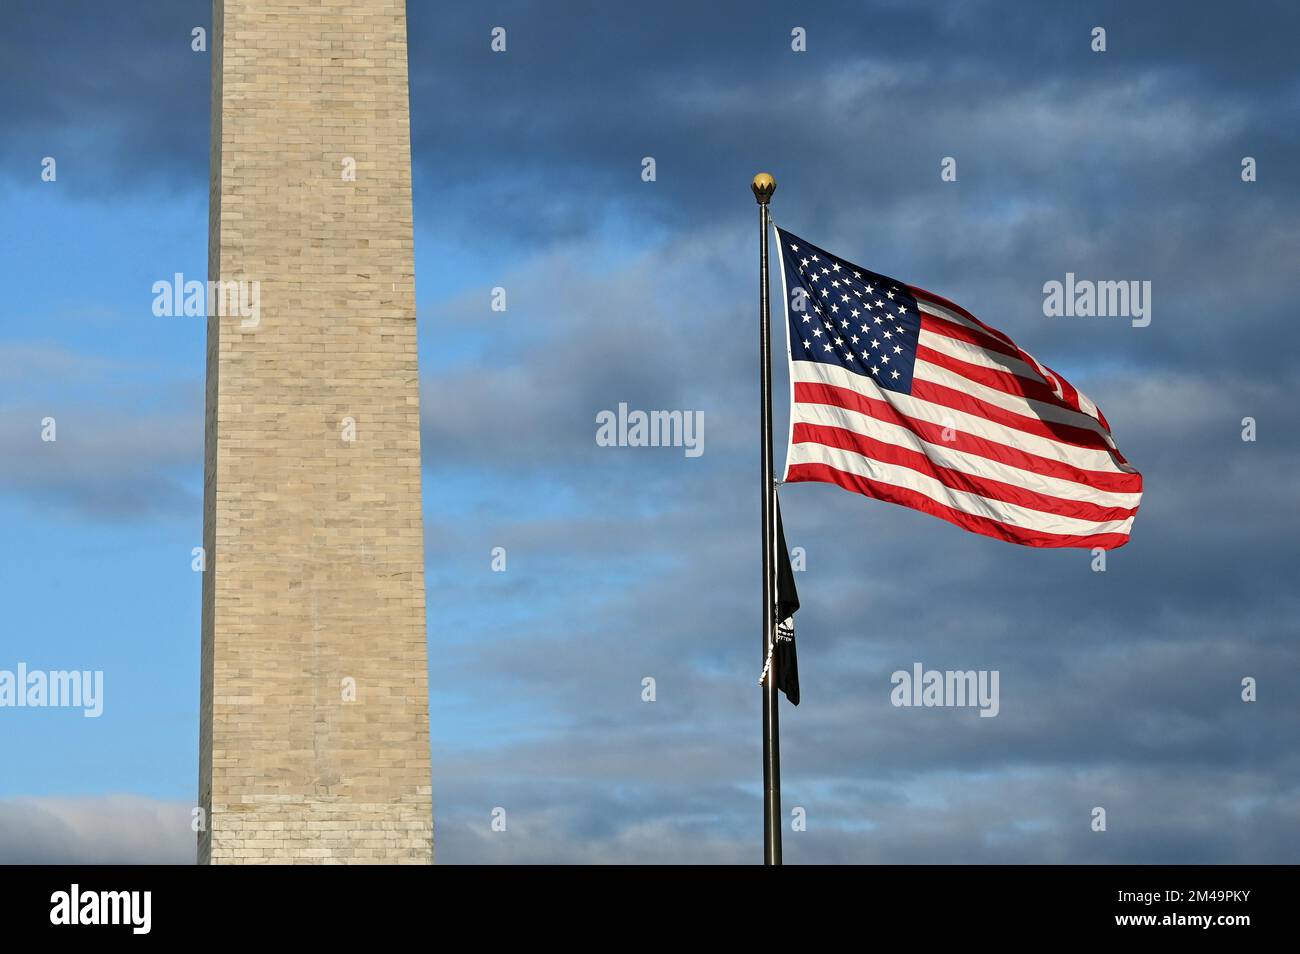 Washington Monument sul National Mall vicino alla US Flag, Washington DC, Stati Uniti d'America Foto Stock